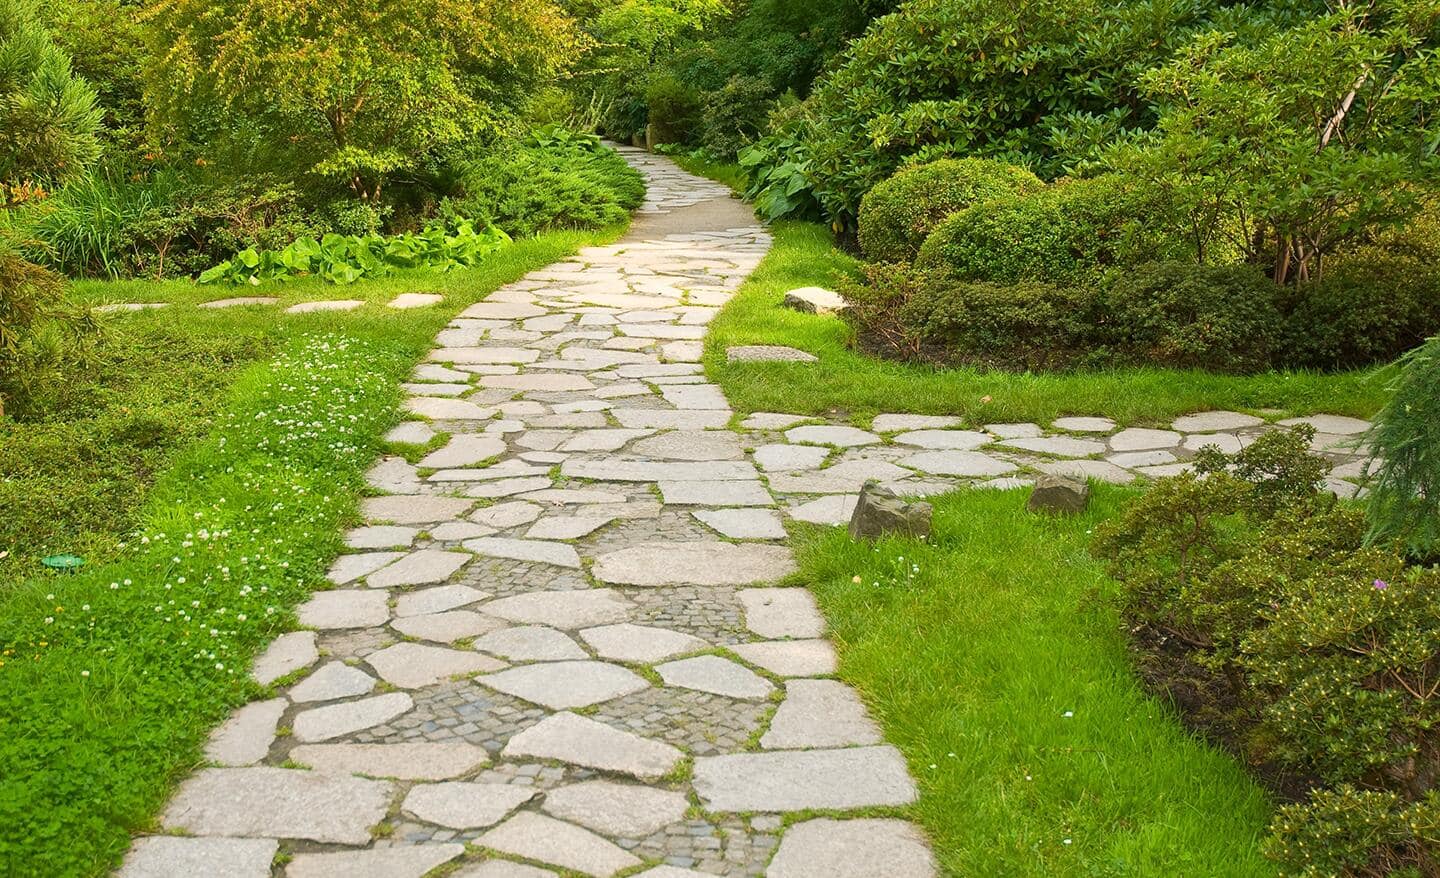 A permeable path through a landscape